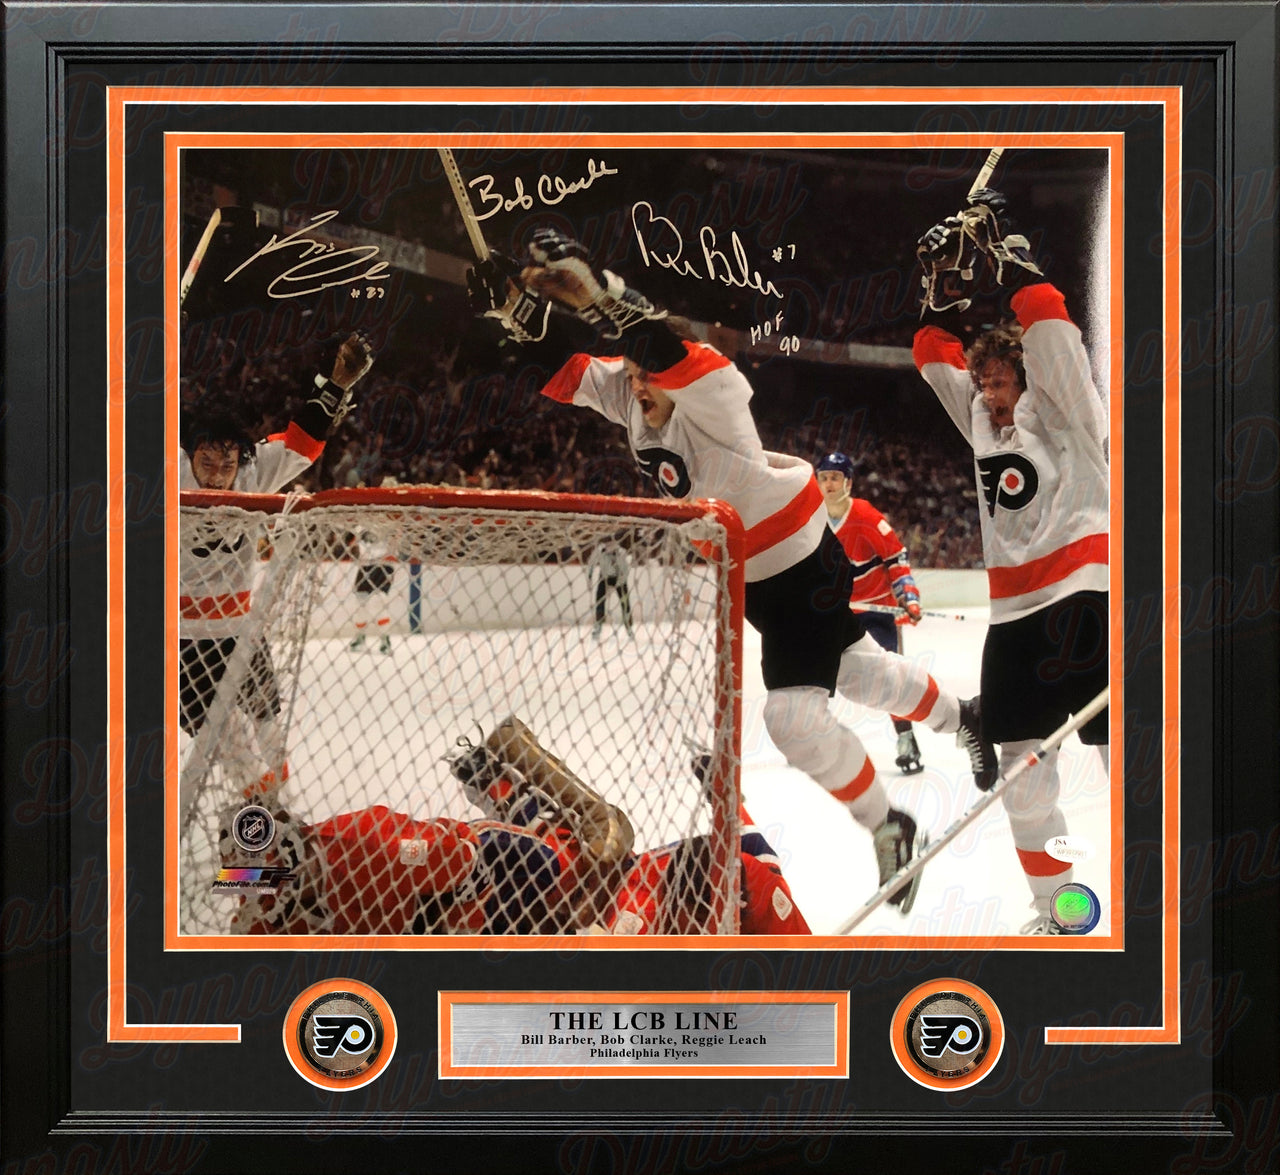 Ivan Provorov Philadelphia Flyers Celebration Autographed 16 x 20